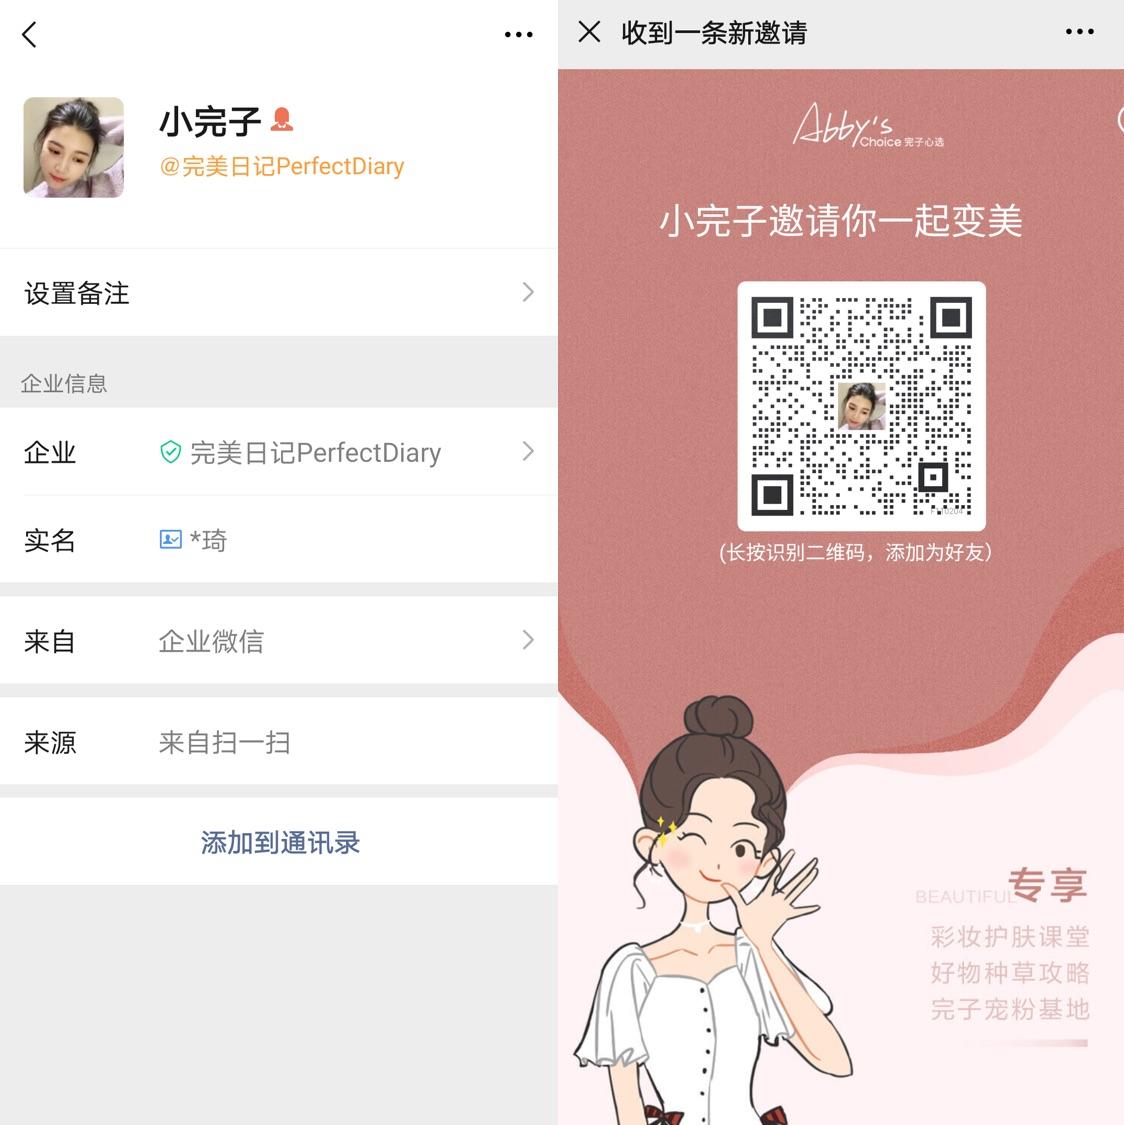 being top domestic brand: Xiao Wanzi account as your personal contact